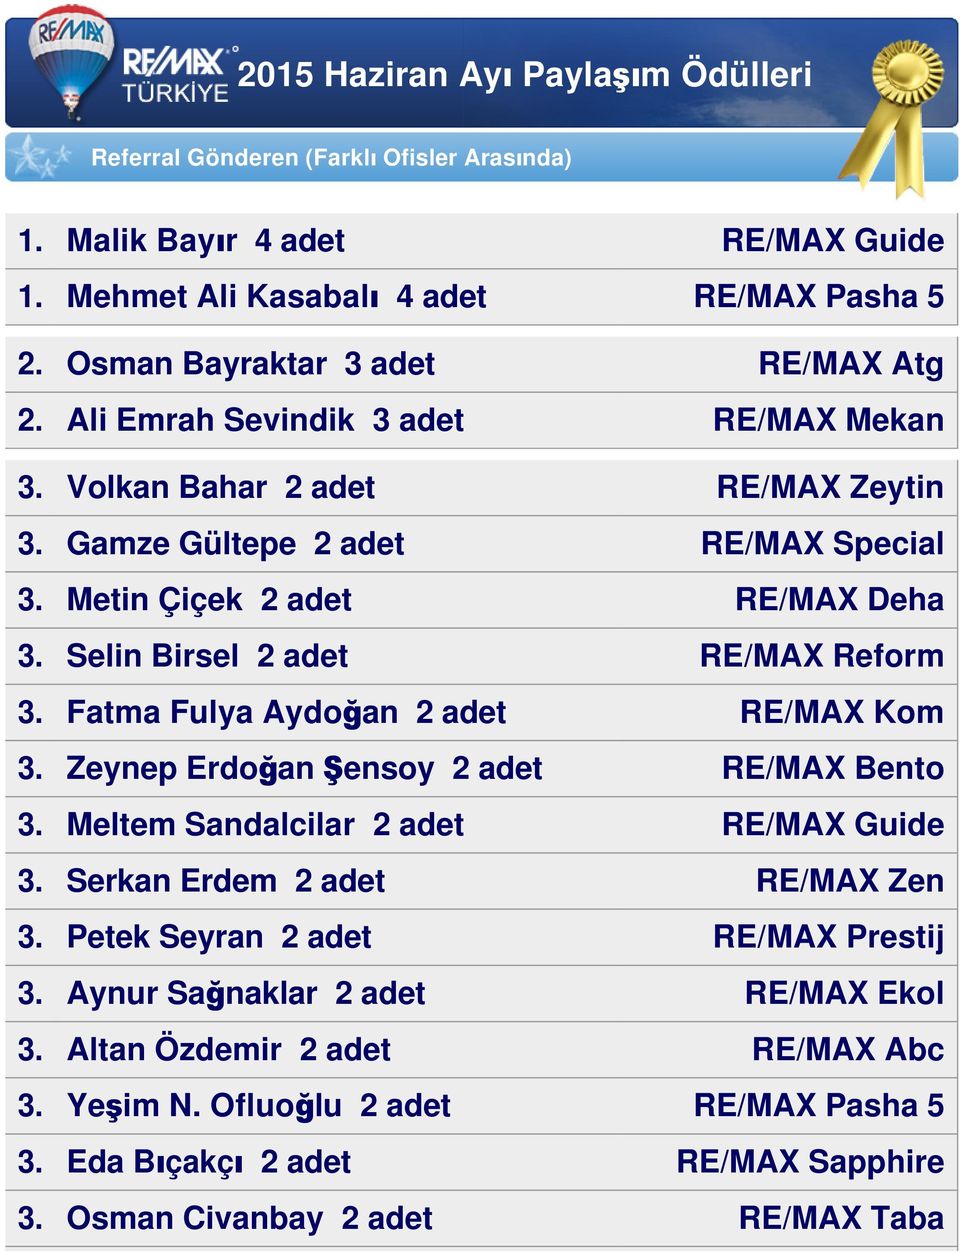 Selin Birsel 2 adet RE/MAX Reform 3. Fatma Fulya Aydoğan 2 adet RE/MAX Kom 3. Zeynep Erdoğan Şensoy 2 adet RE/MAX Bento 3. Meltem Sandalcilar 2 adet RE/MAX Guide 3.